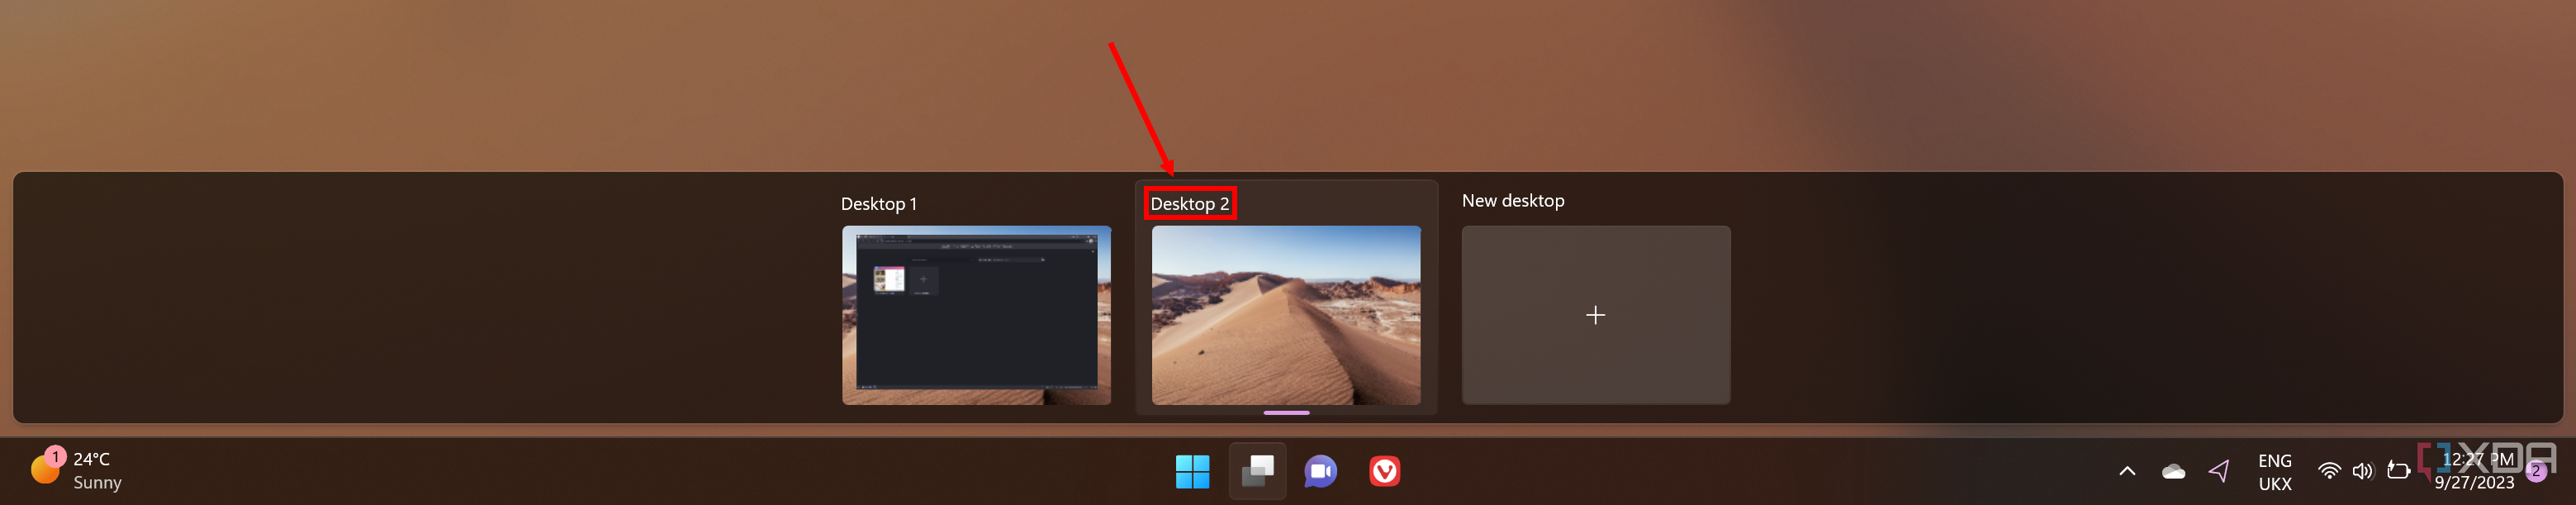 Screenshot of virtual desktops in Task View. The name of Desktop 2 is highlighted